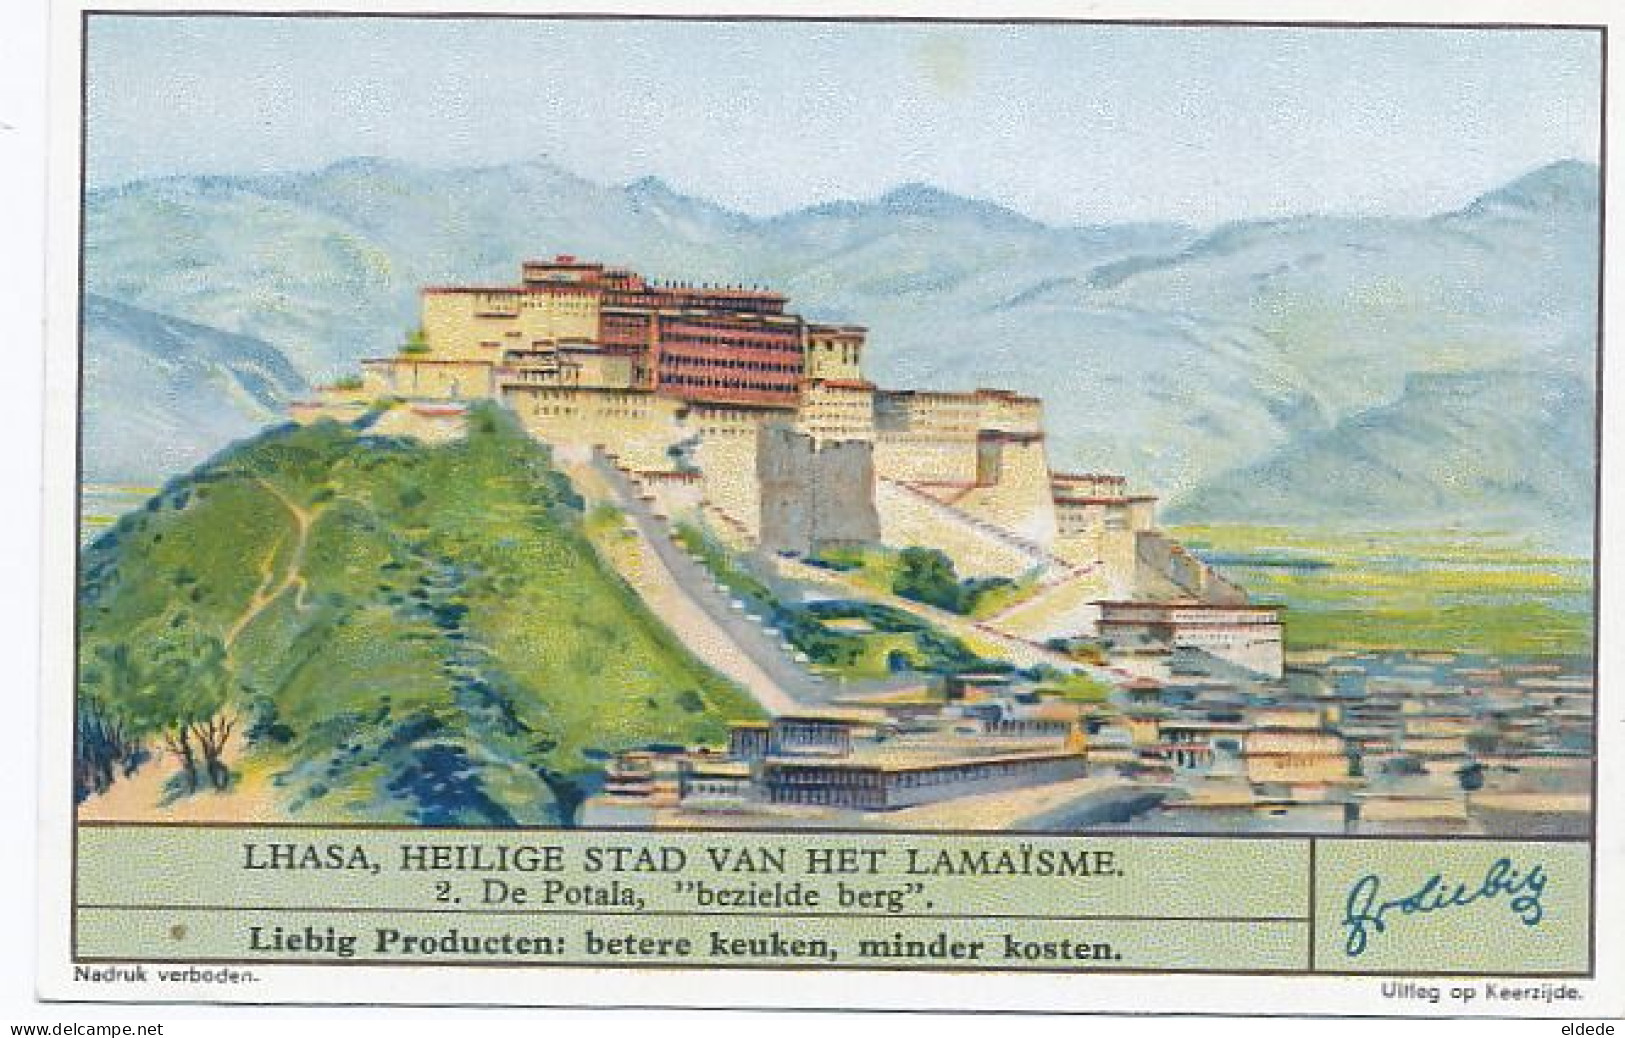 6 Image Advert Liebig Tibet Thibet Dalai Lama Lamaism Bouddha Potala  Yokhang Ganden Lhasa - Tibet